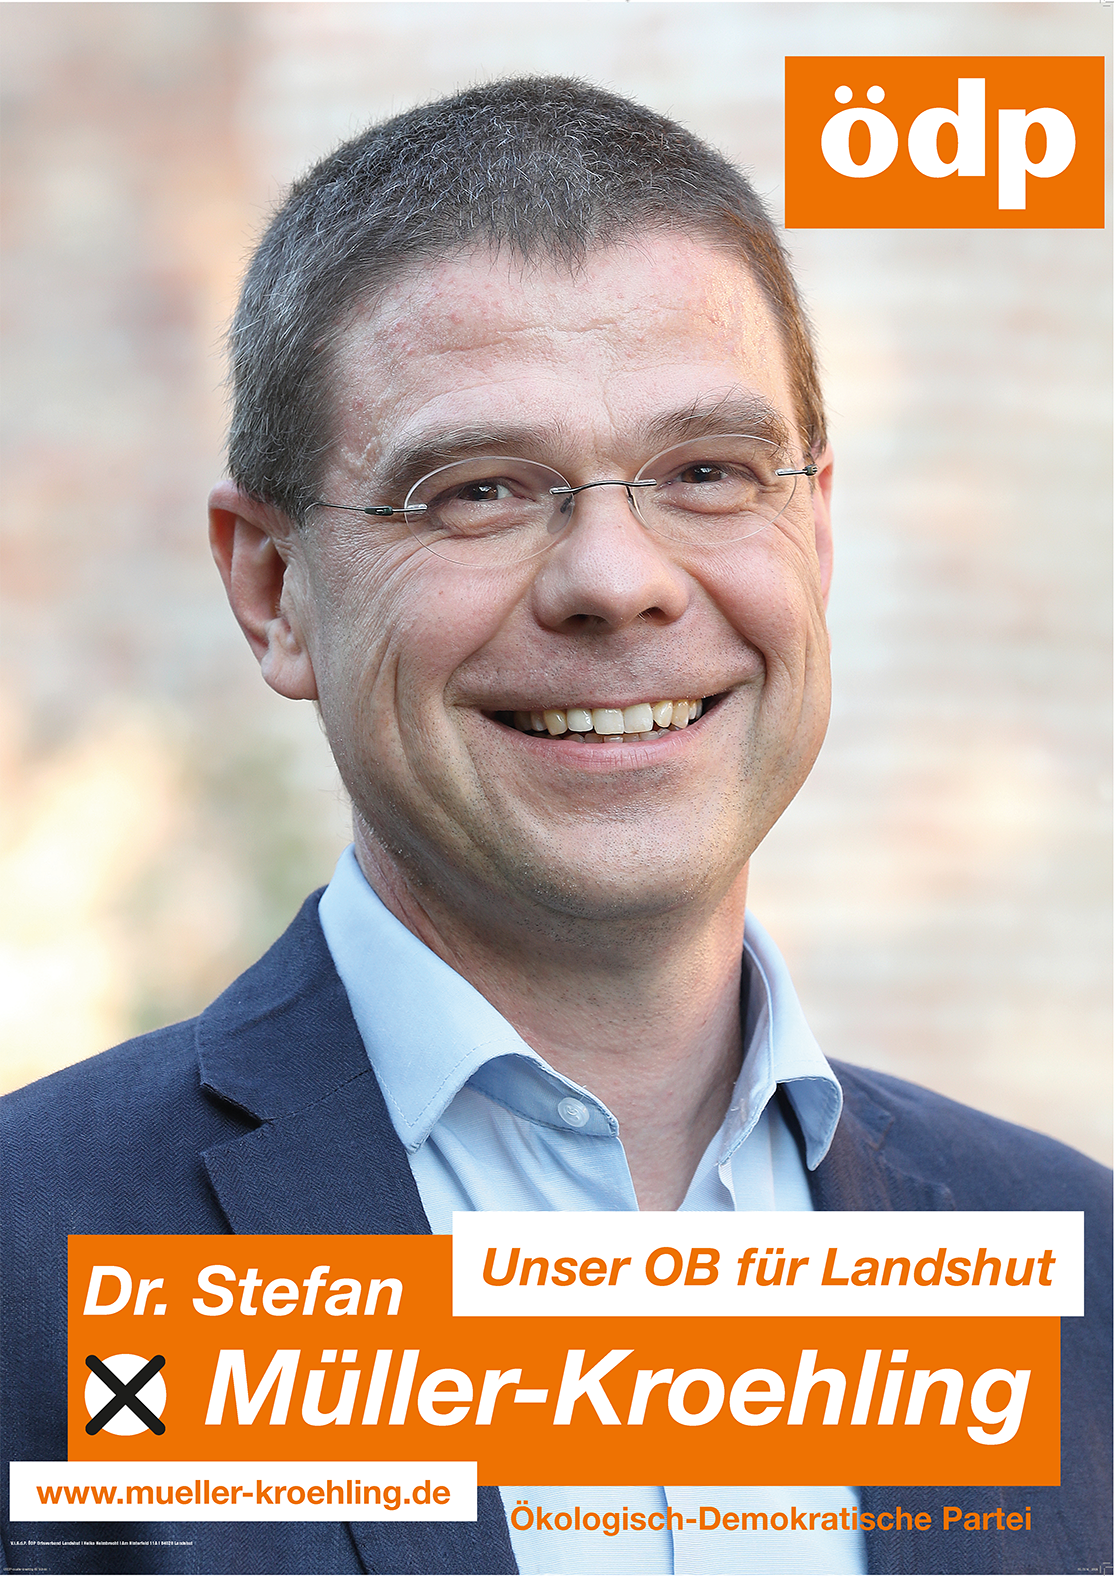 Offizielles Wahlplakat von Dr. Stefan Müller-Kroehling